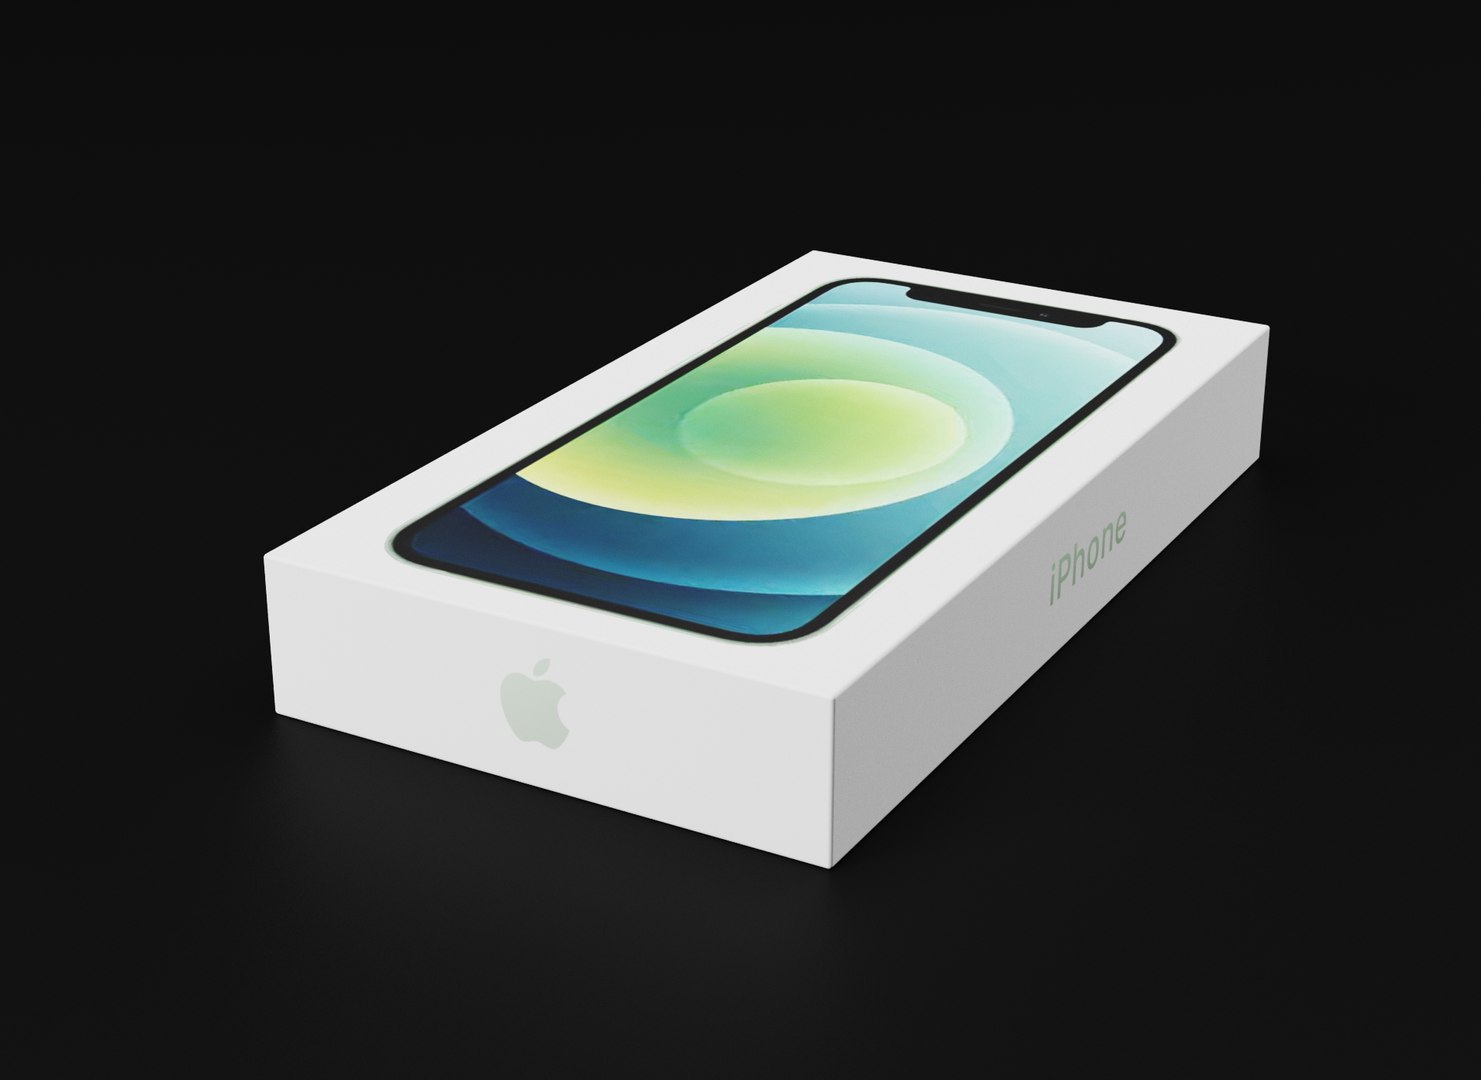 3D apple iphone 12 box model https://p.turbosquid.com/ts-thumb/ab/6zLSIH/Od/12box50001/png/1627377683/1920x1080/fit_q87/b4b05fe3da49638e7c0d393b8cc838bf70125cf5/12box50001.jpg